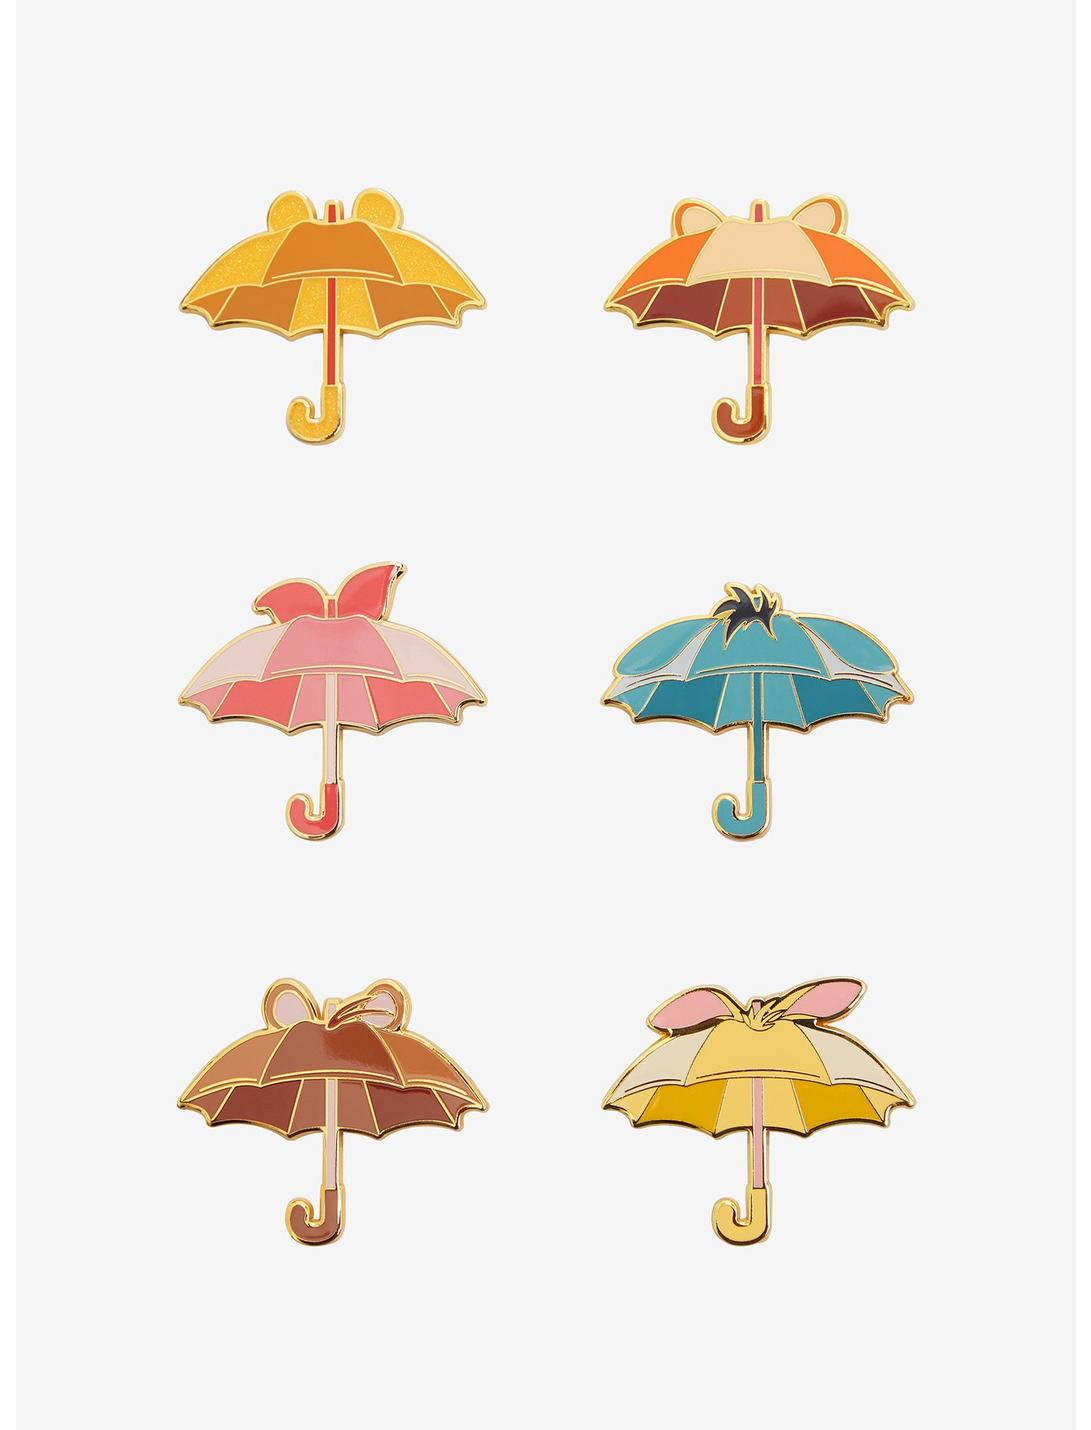 Loungefly Disney Winnie the Pooh Character Umbrella Blind Box Pin, , hi-res